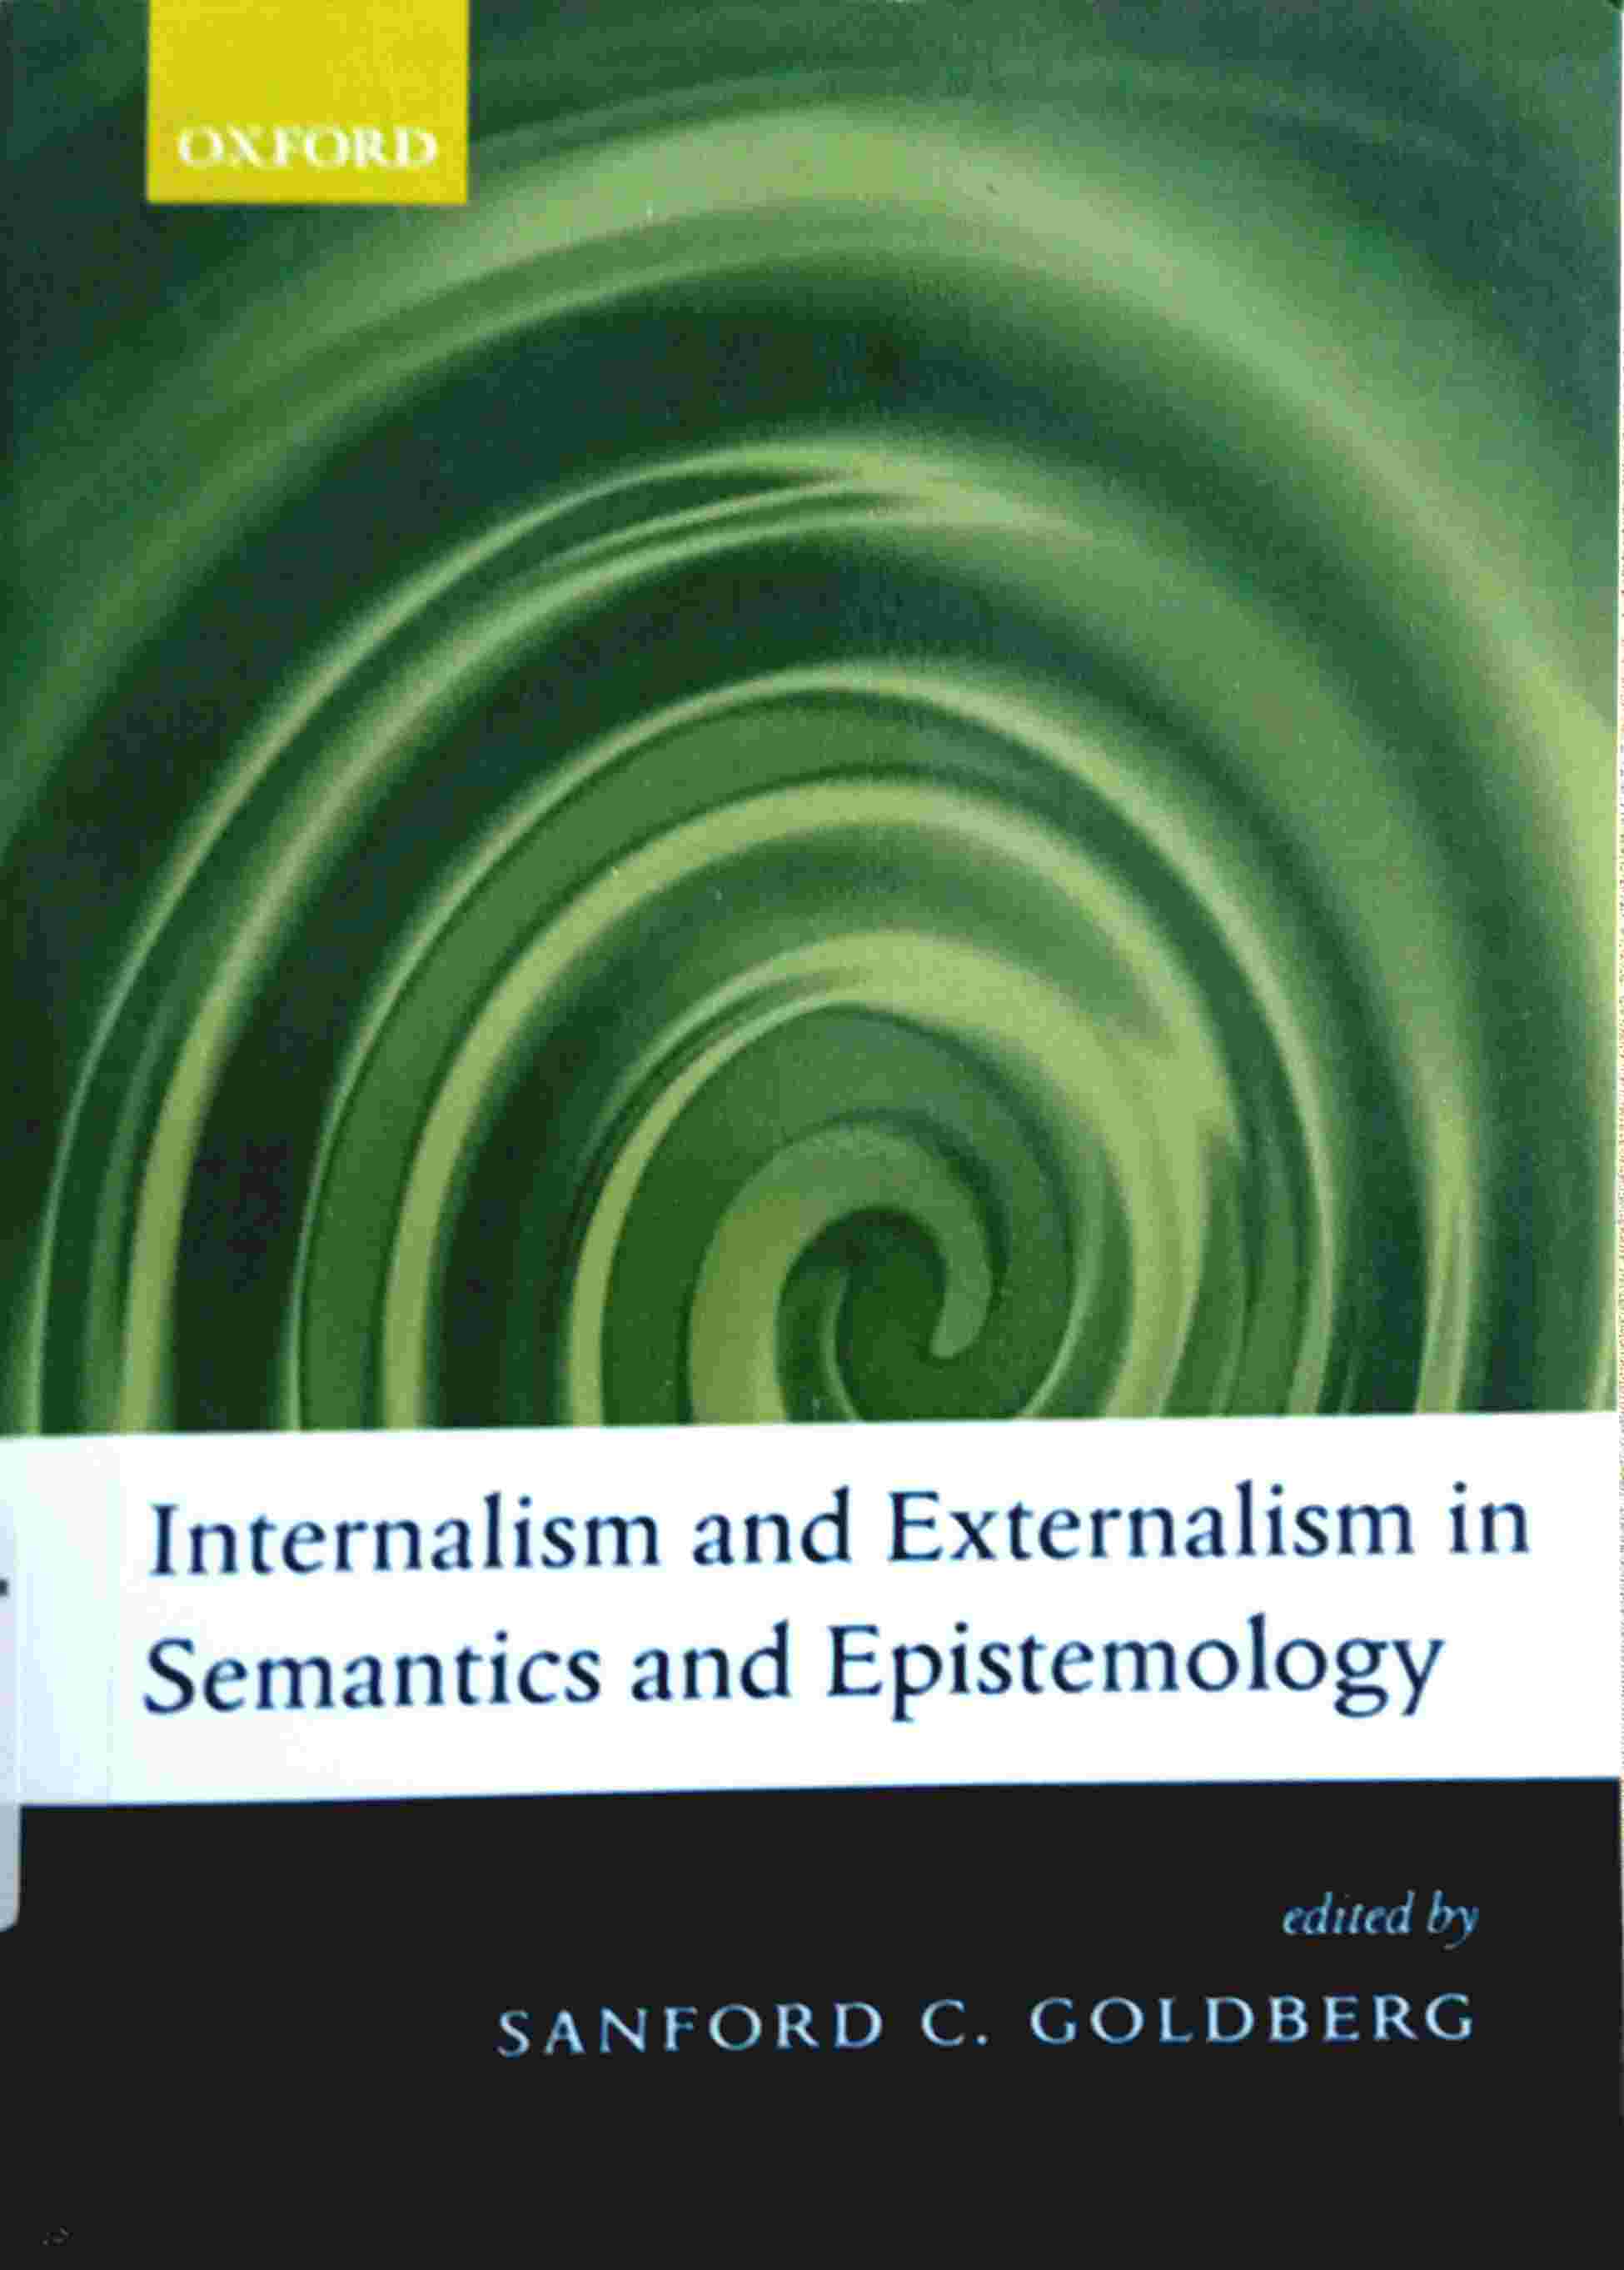 INTERNALISM AND EXTERNALISM IN SEMANTICS AND EPISTEMOLOGY